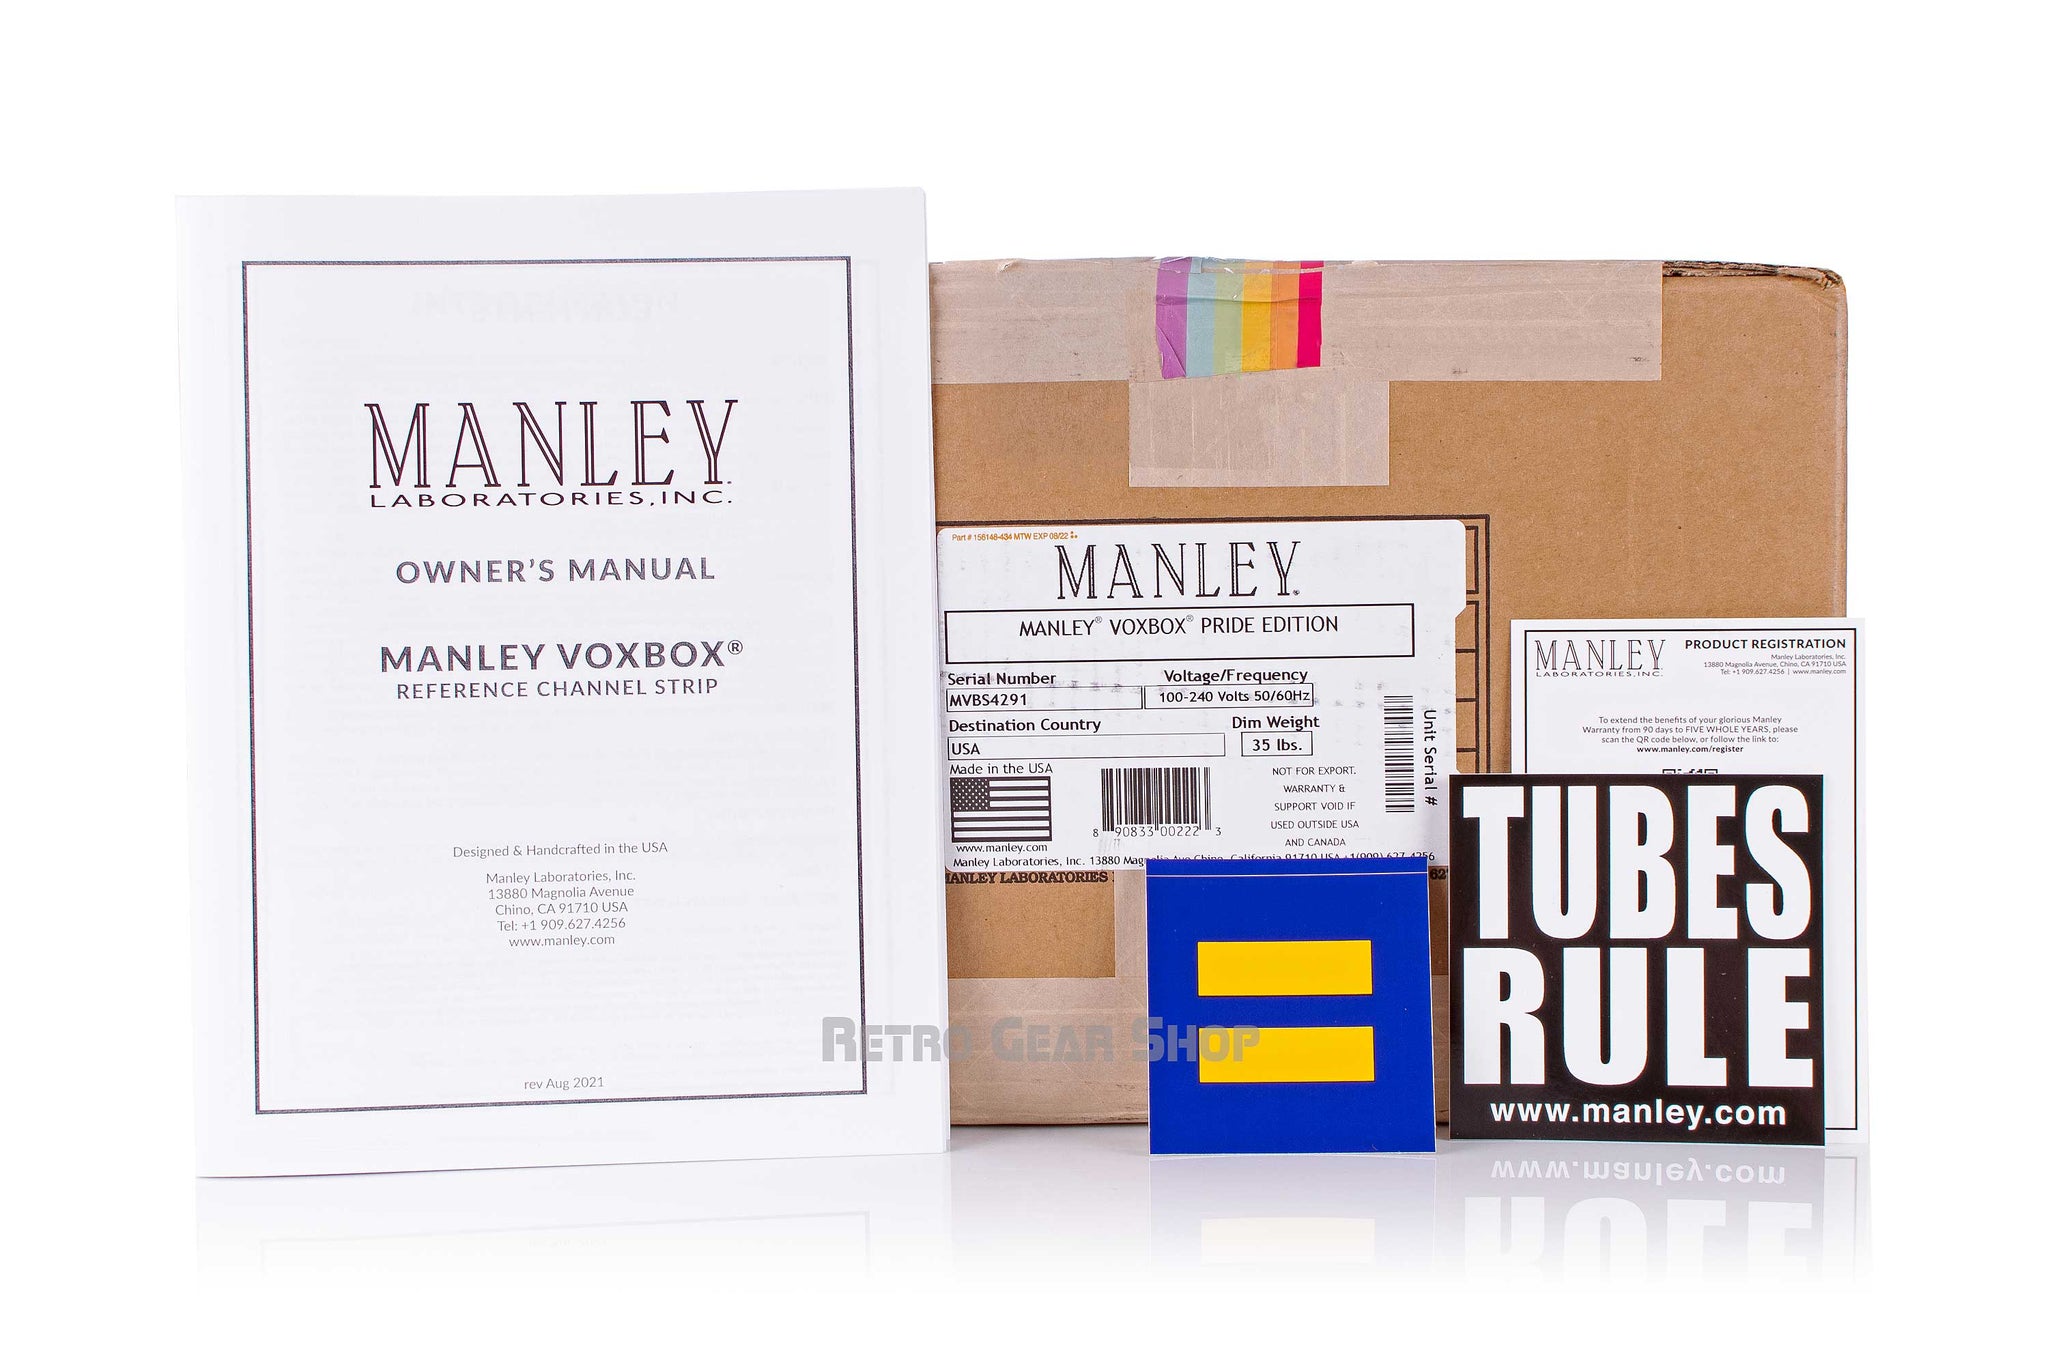 Manley Voxbox 2021 Pride Limited Edition Box Extras